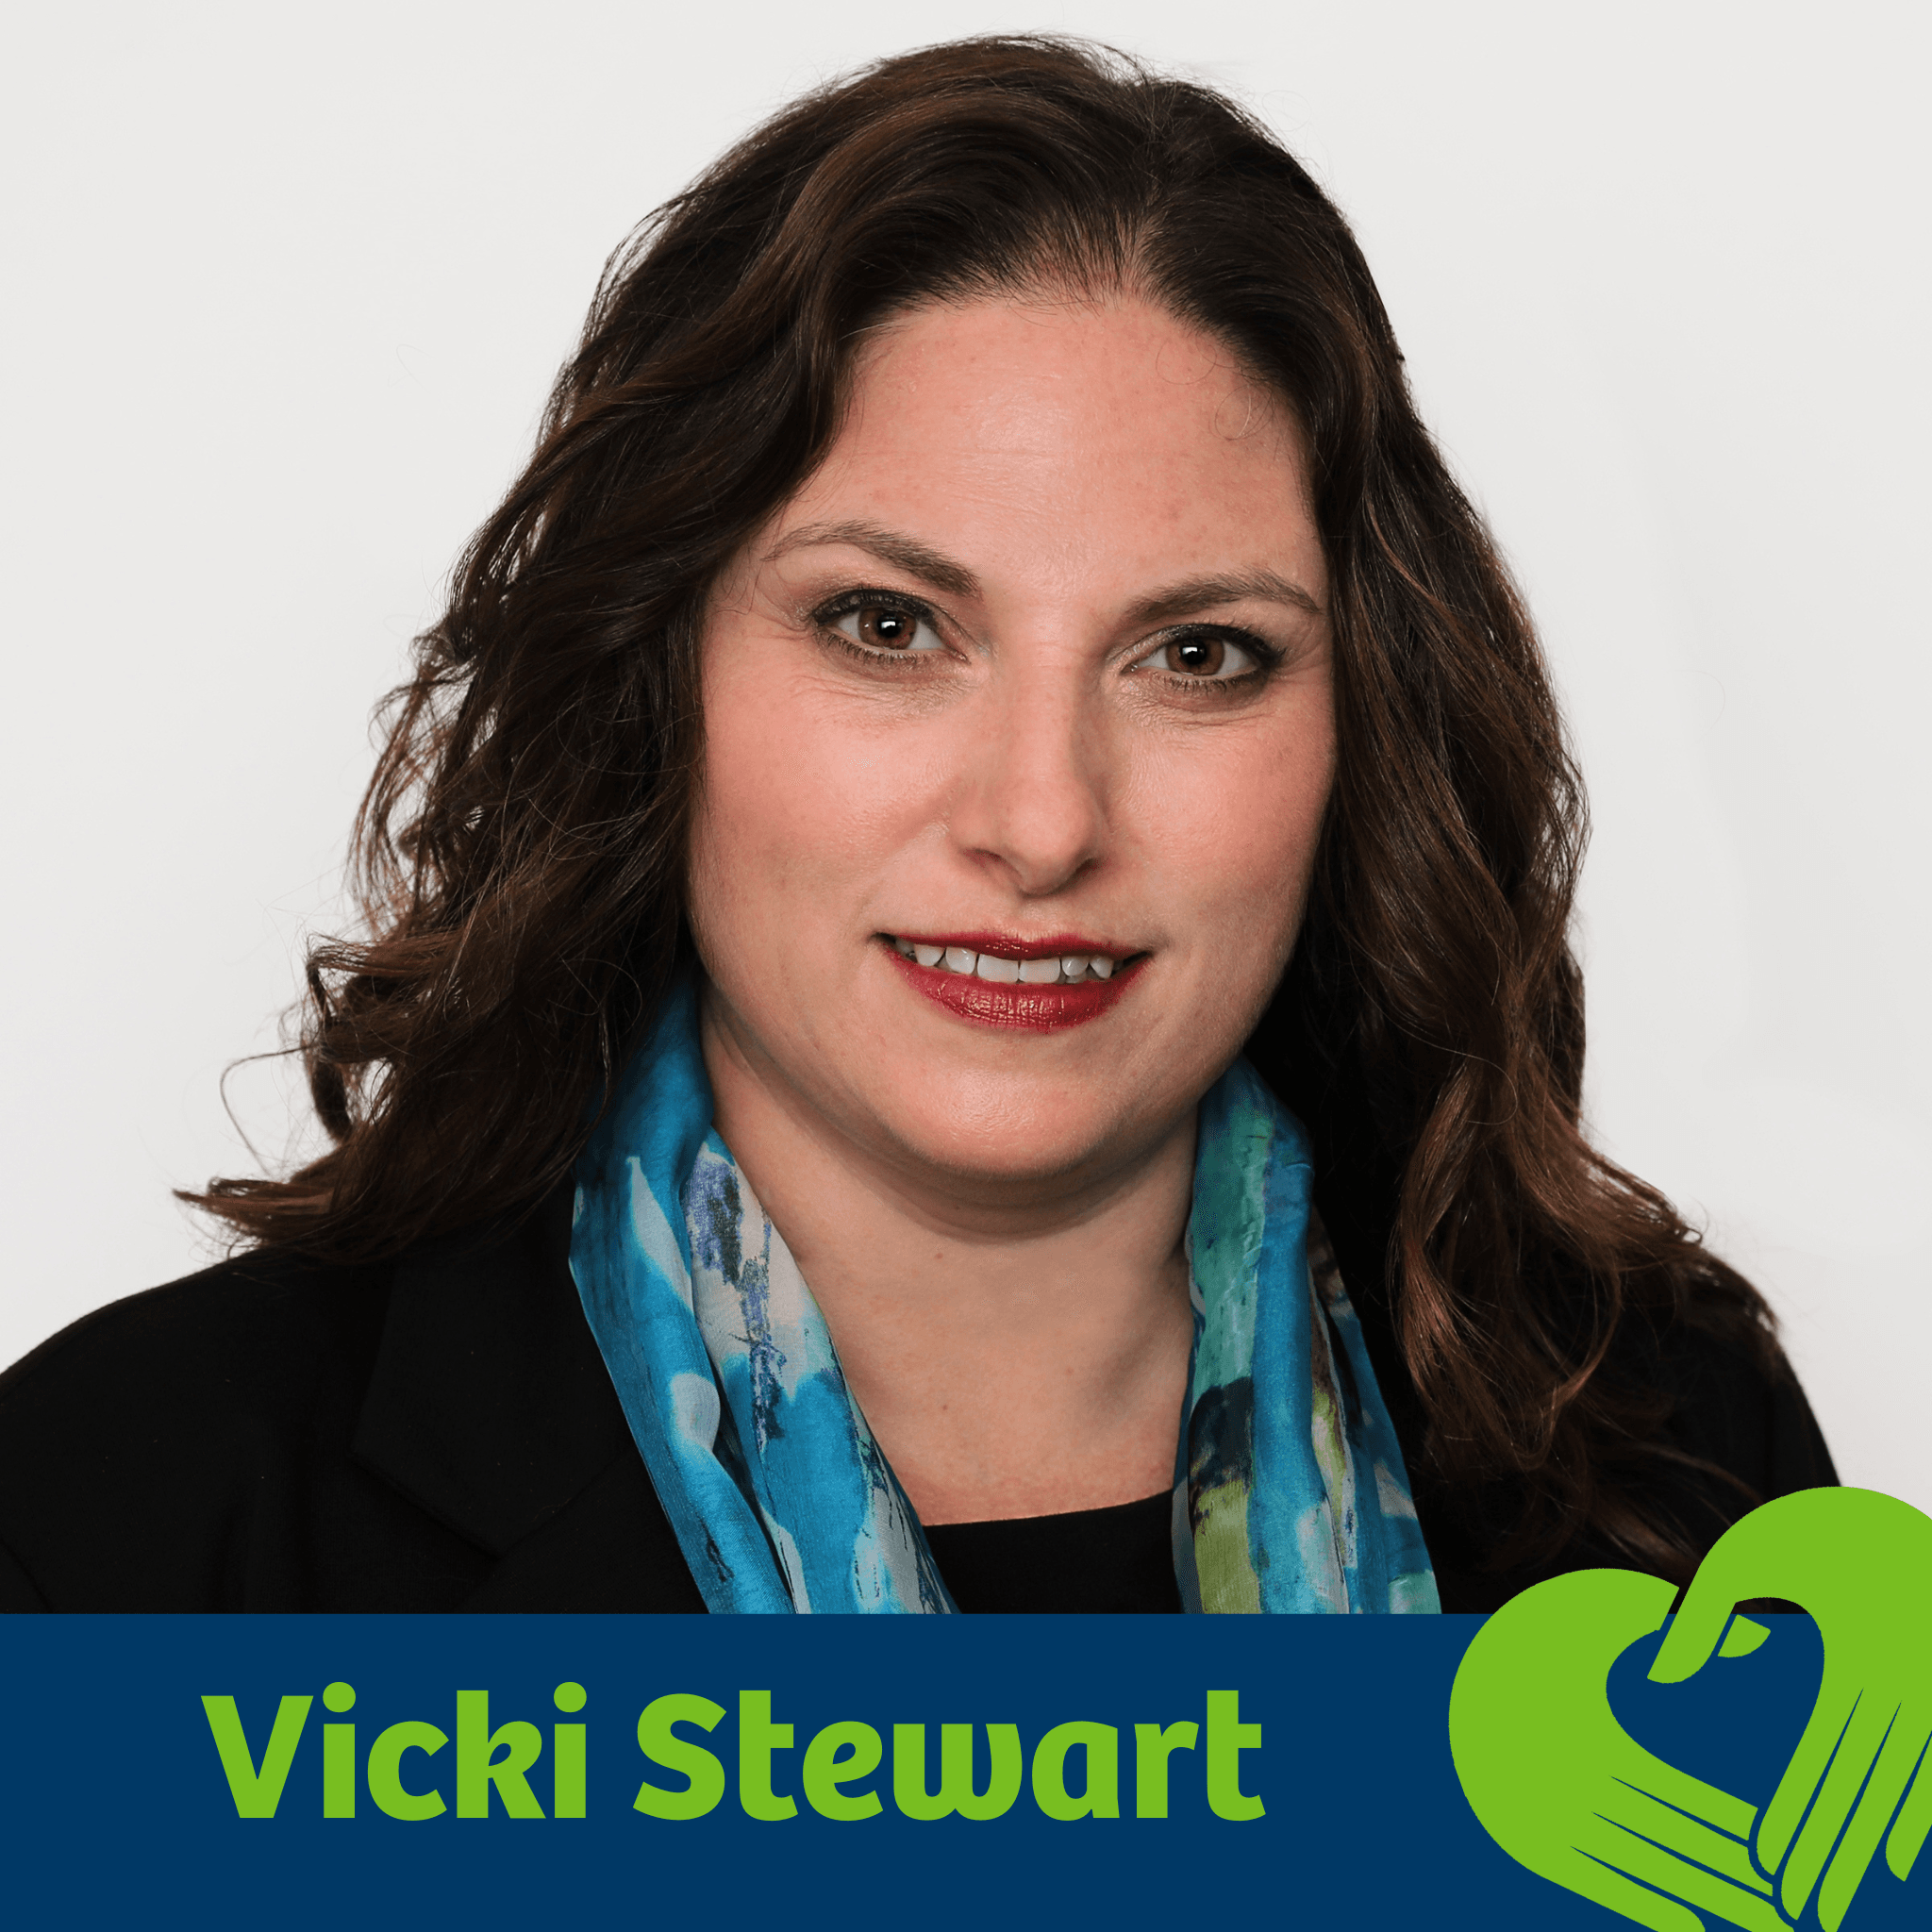 Vicki Stewart